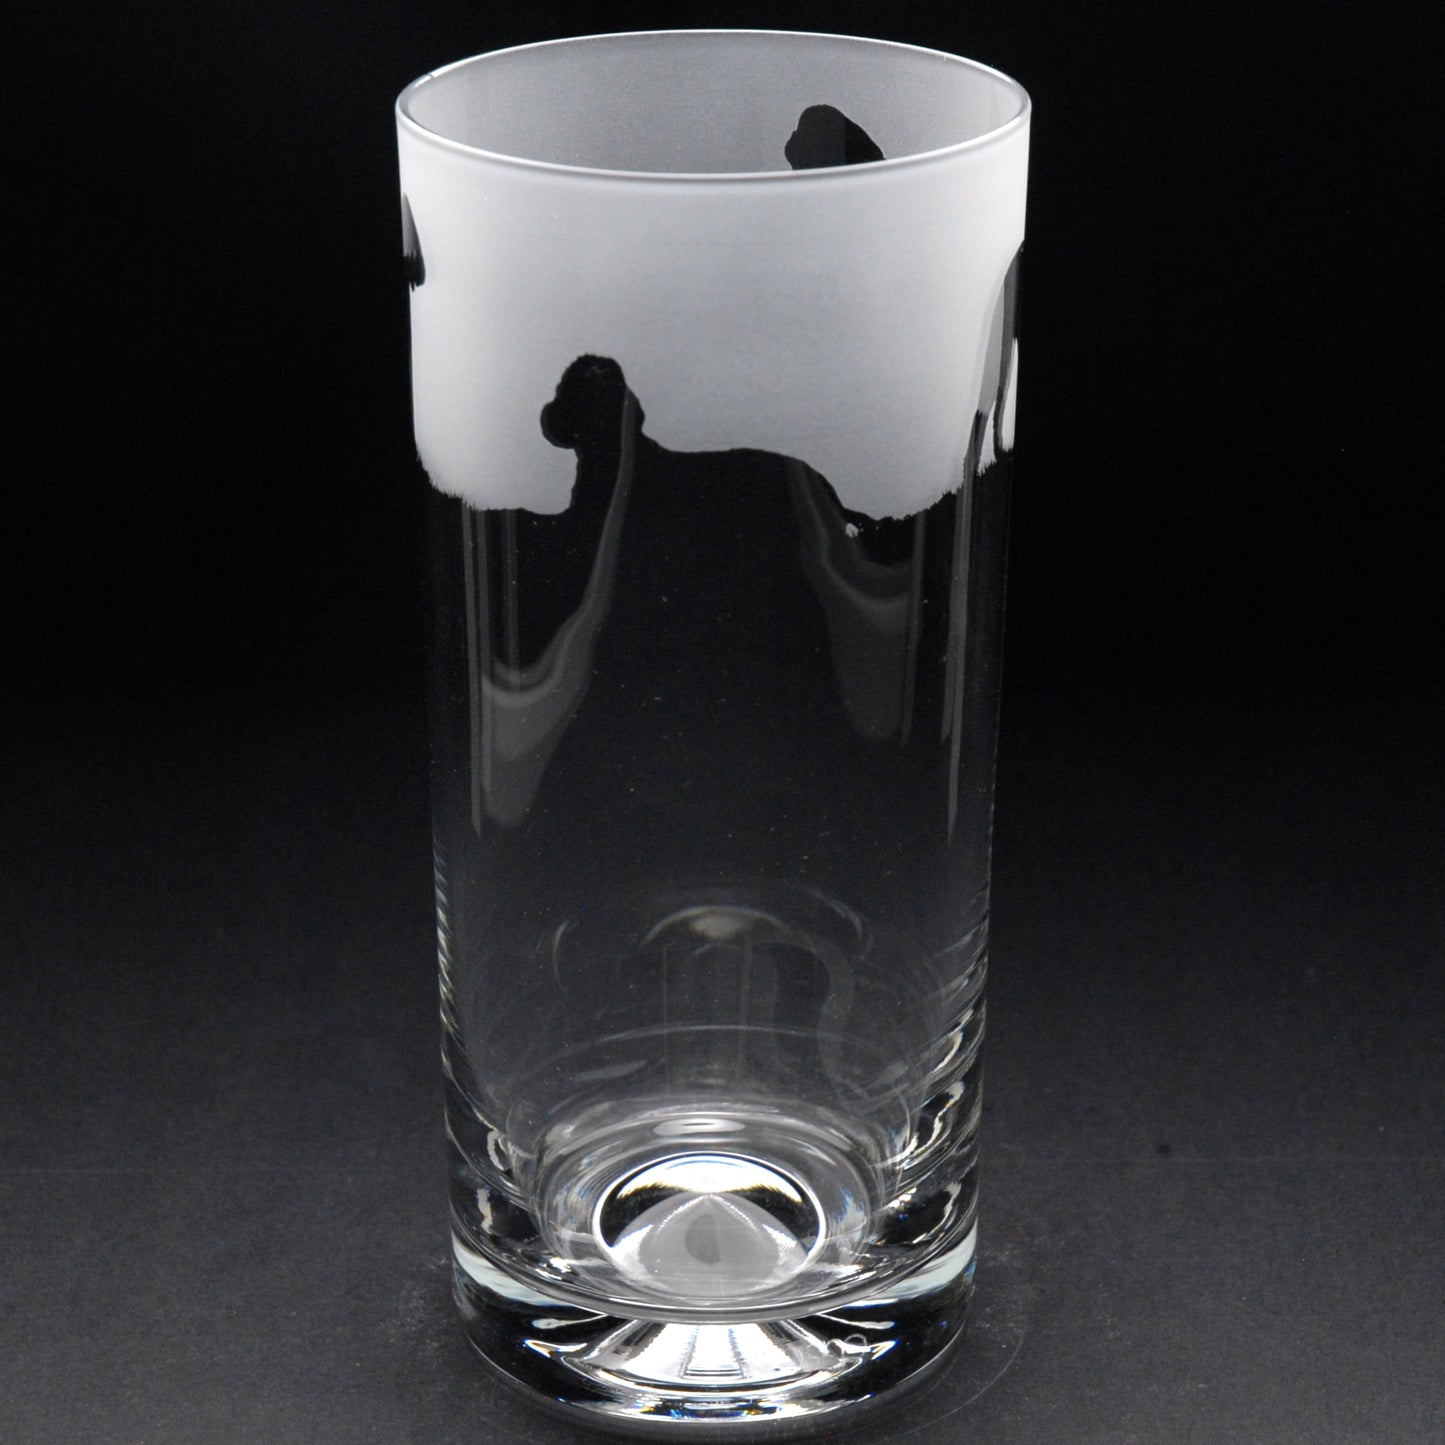 Bedlington Terrier Dog Highball Glass - Hand Etched/Engraved Gift